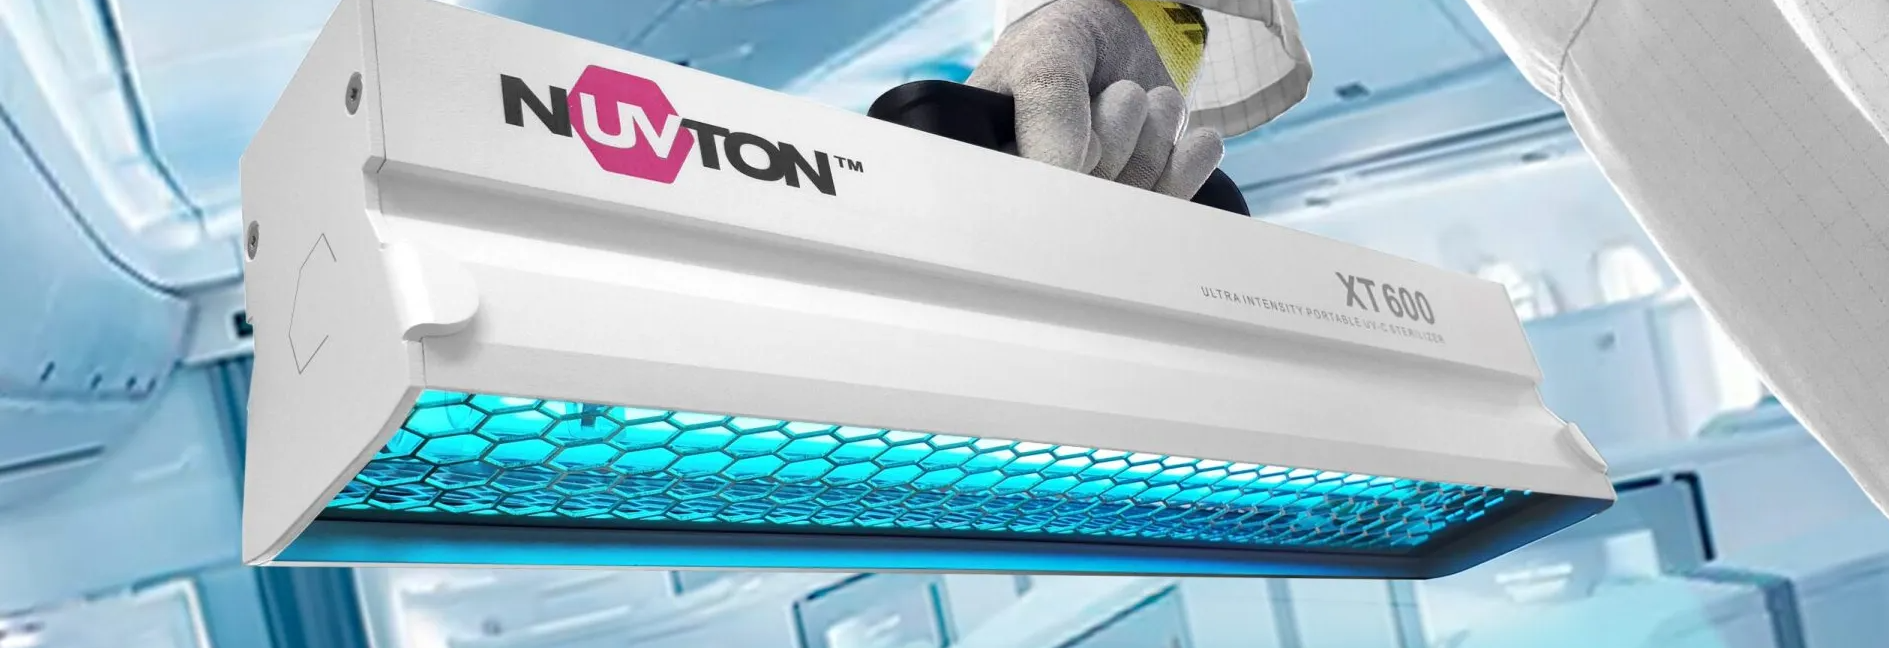 Nuvton XT UV-C Licht Sterilisator Sterilisierer Entkeimer